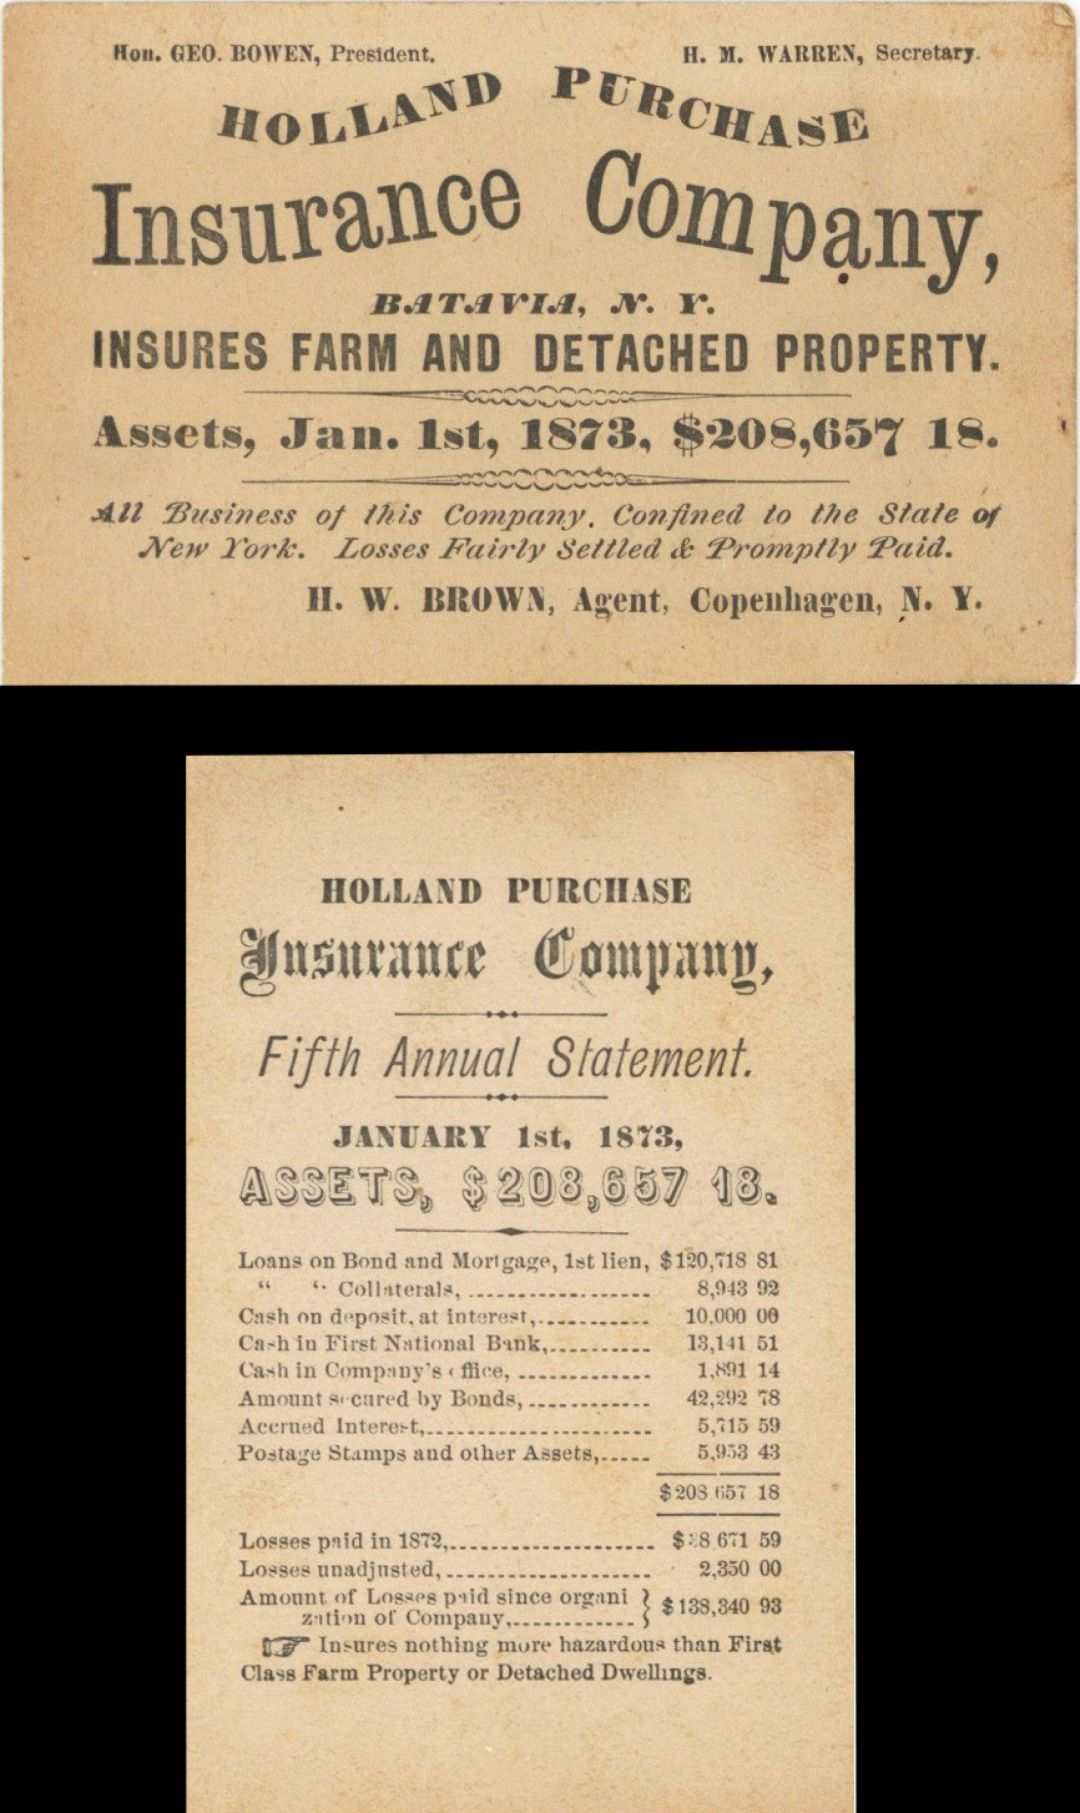 Holland Purchase Insurance Co., Batavia, N.Y. Card - 1873 dated Insurance Card